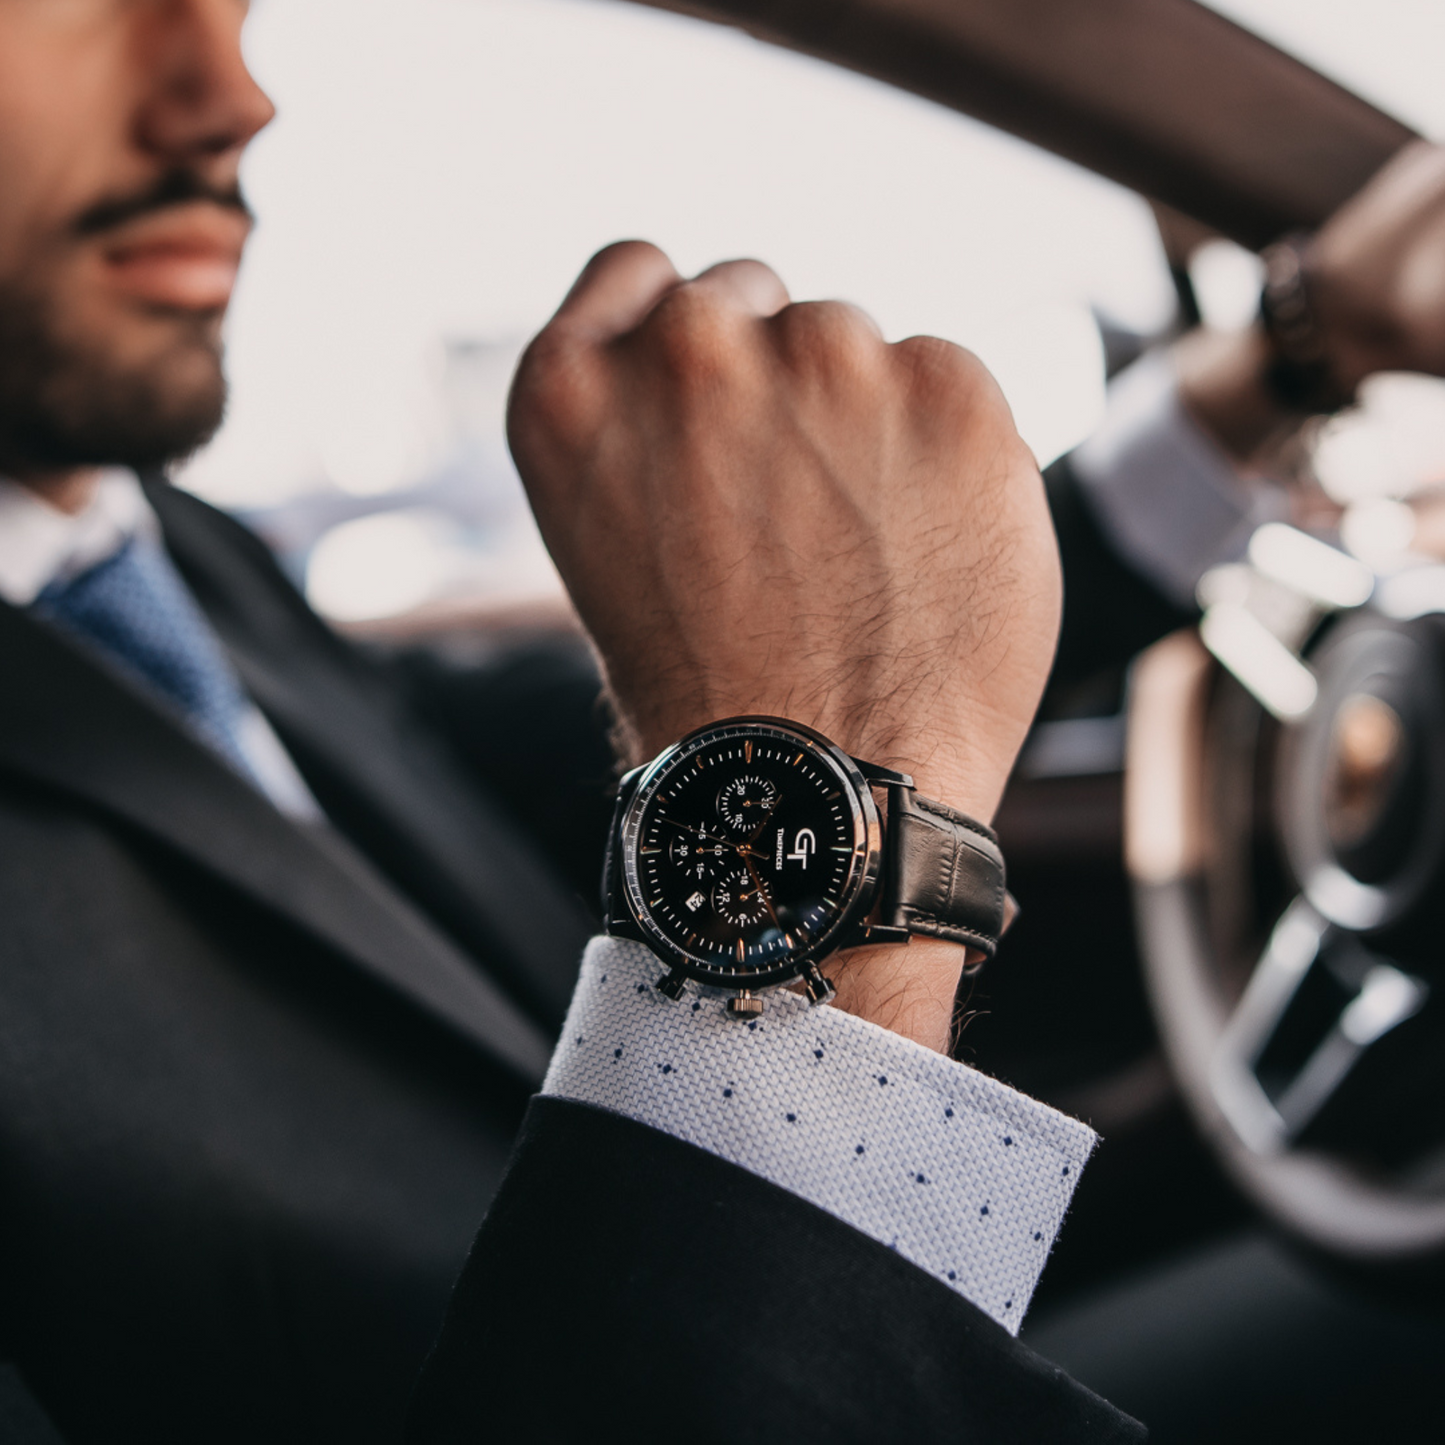 Men's Watch - Black Leather Strap - Black Watch Face